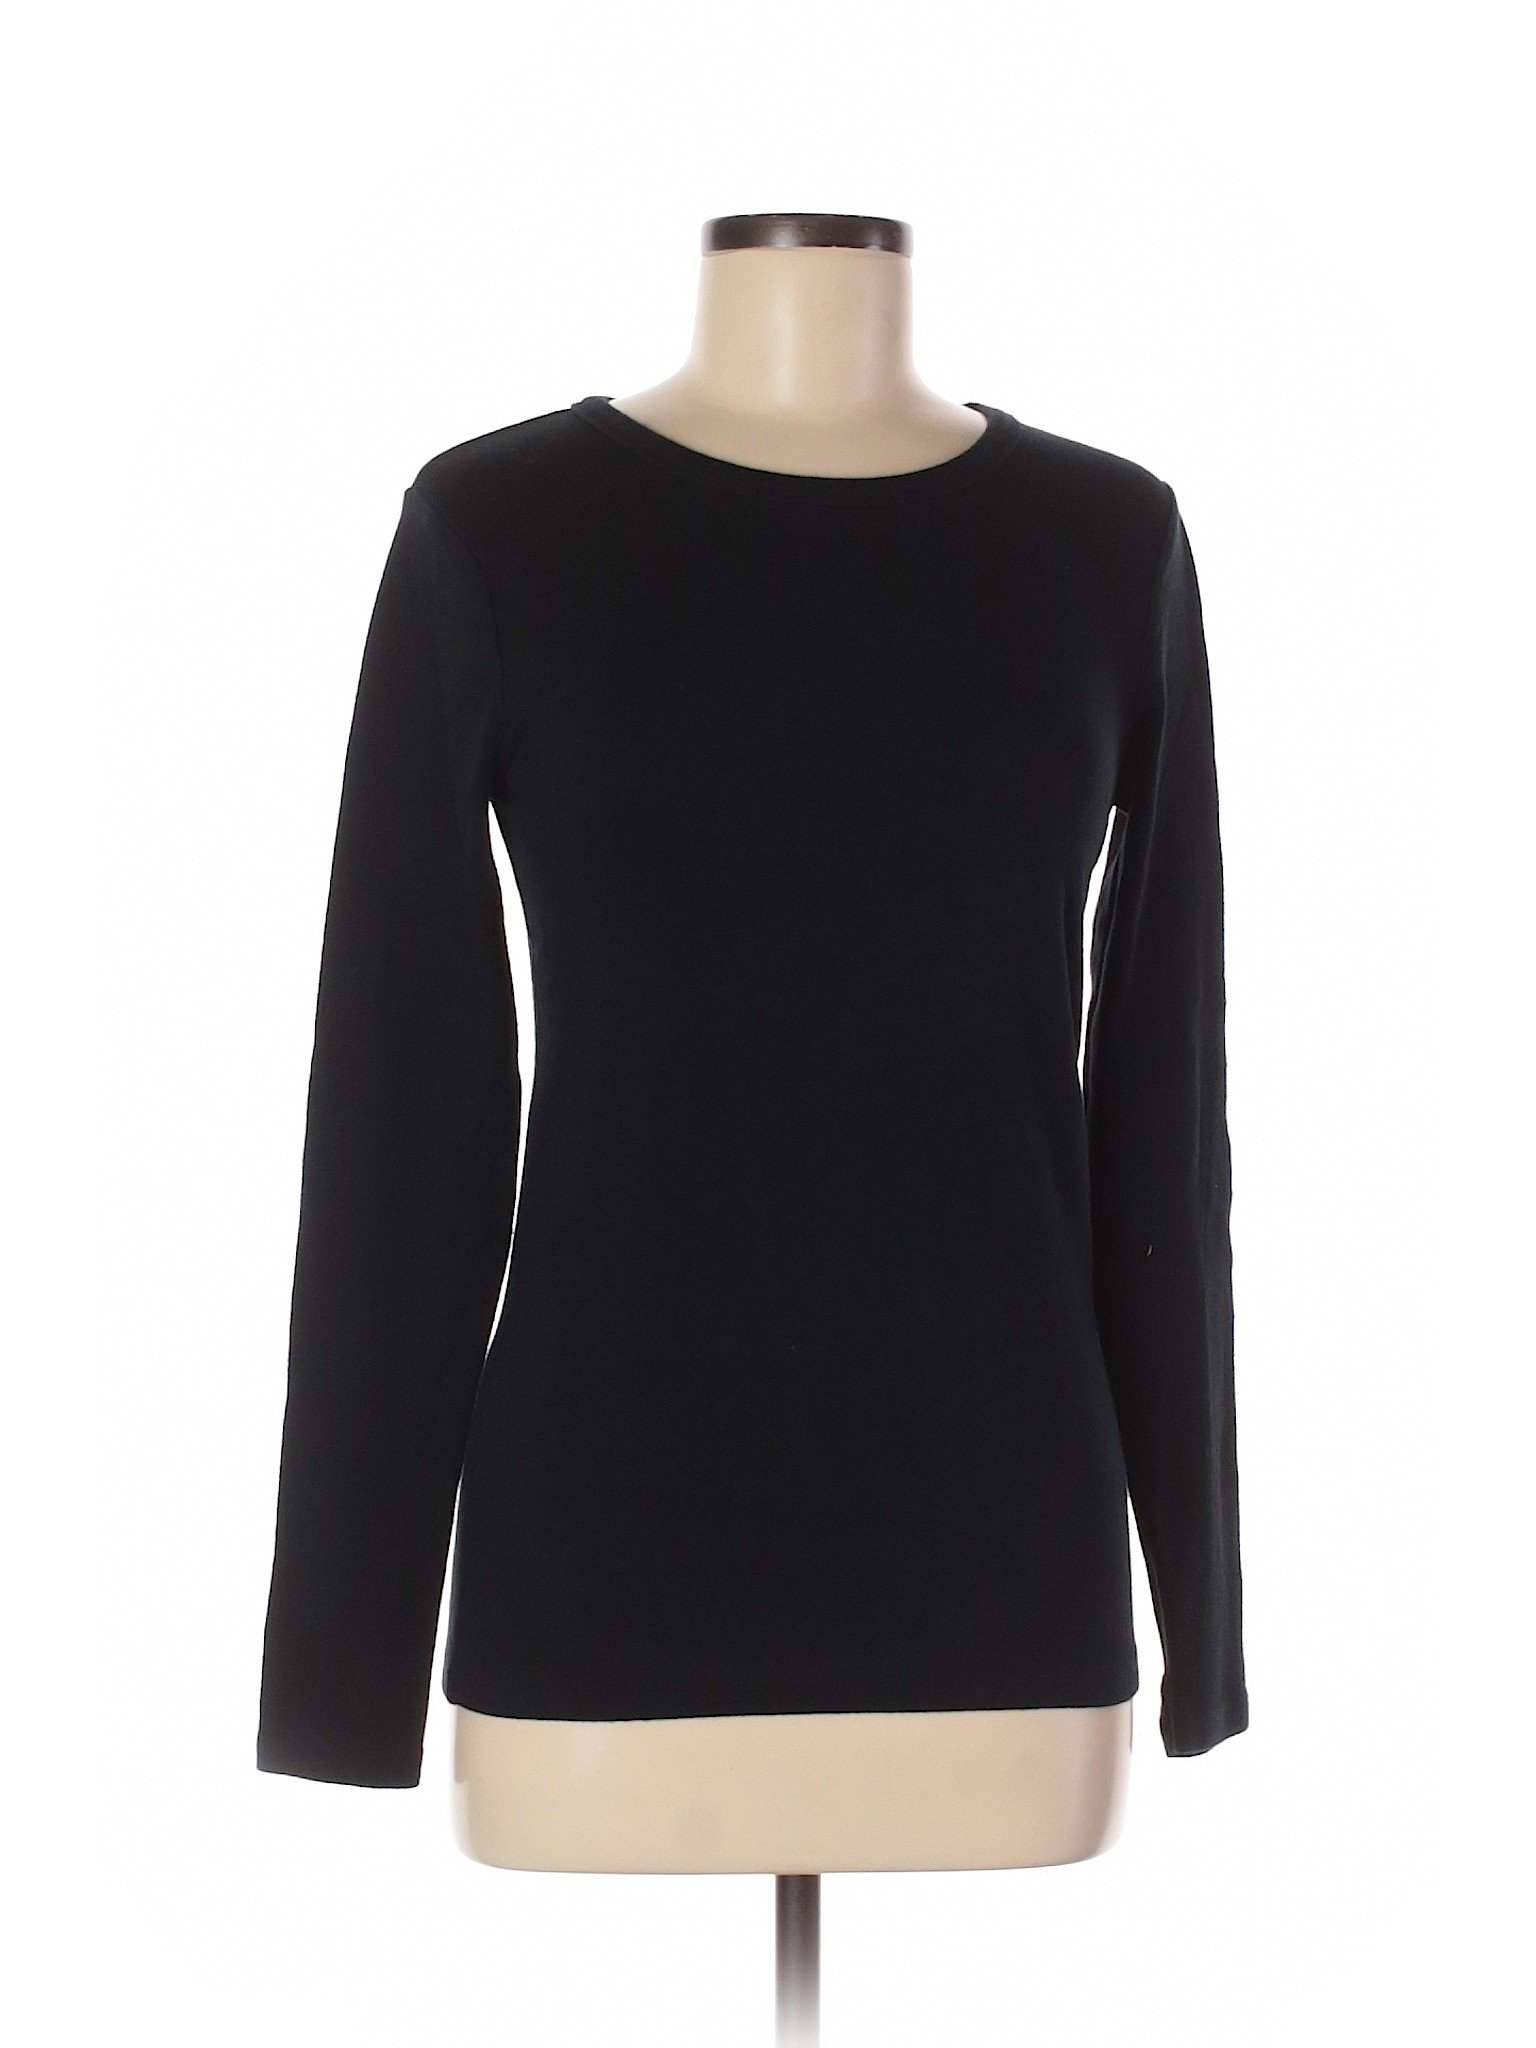 Gap Women Black Long Sleeve T-Shirt M | eBay